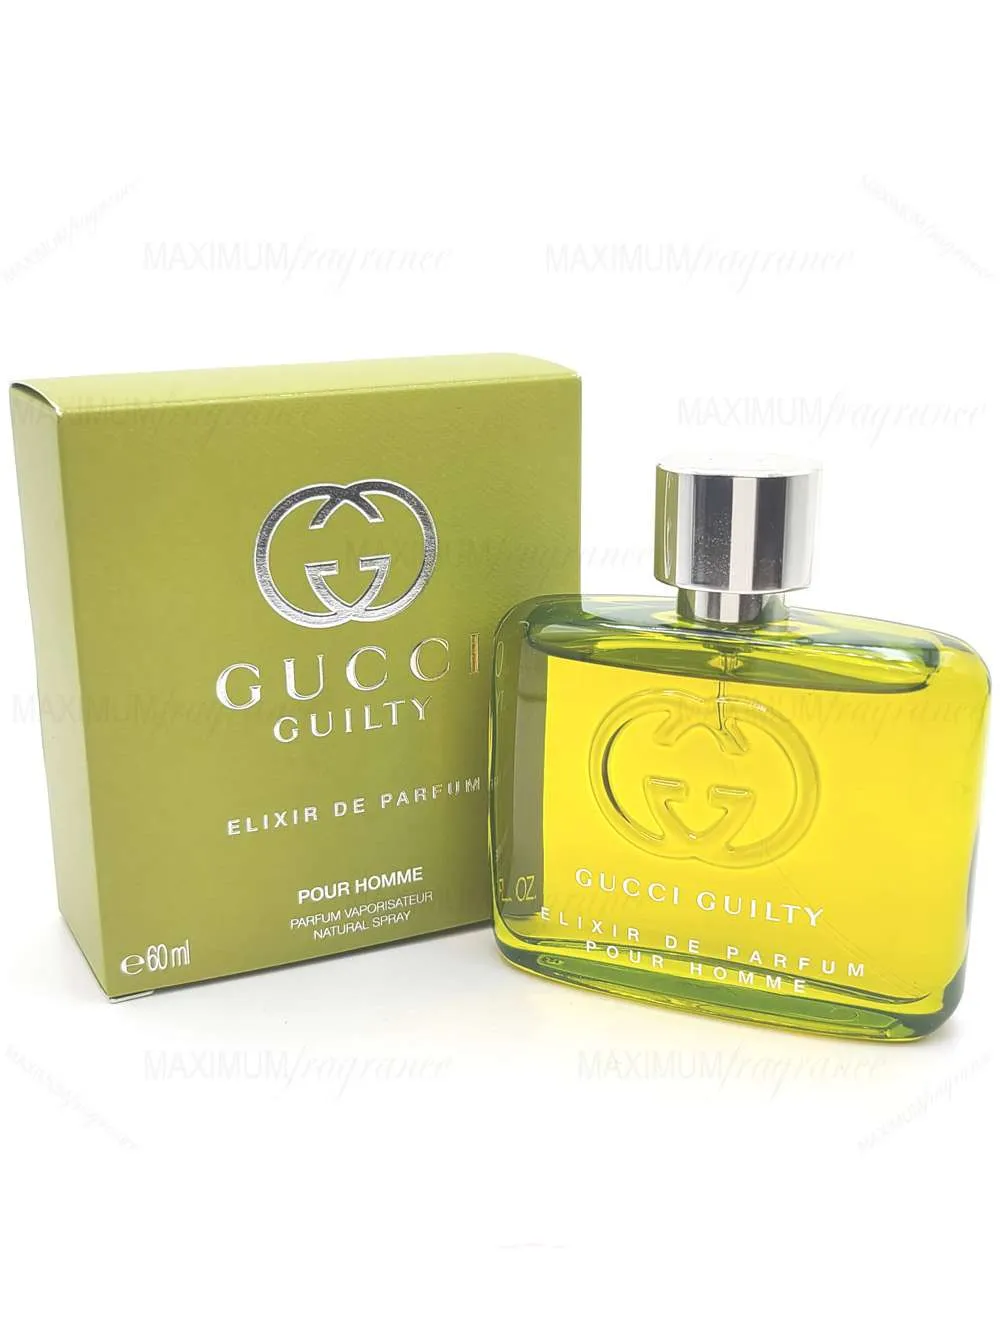 Gucci Guilty Elixir De Parfum - Gucci - Maximum Fragrance